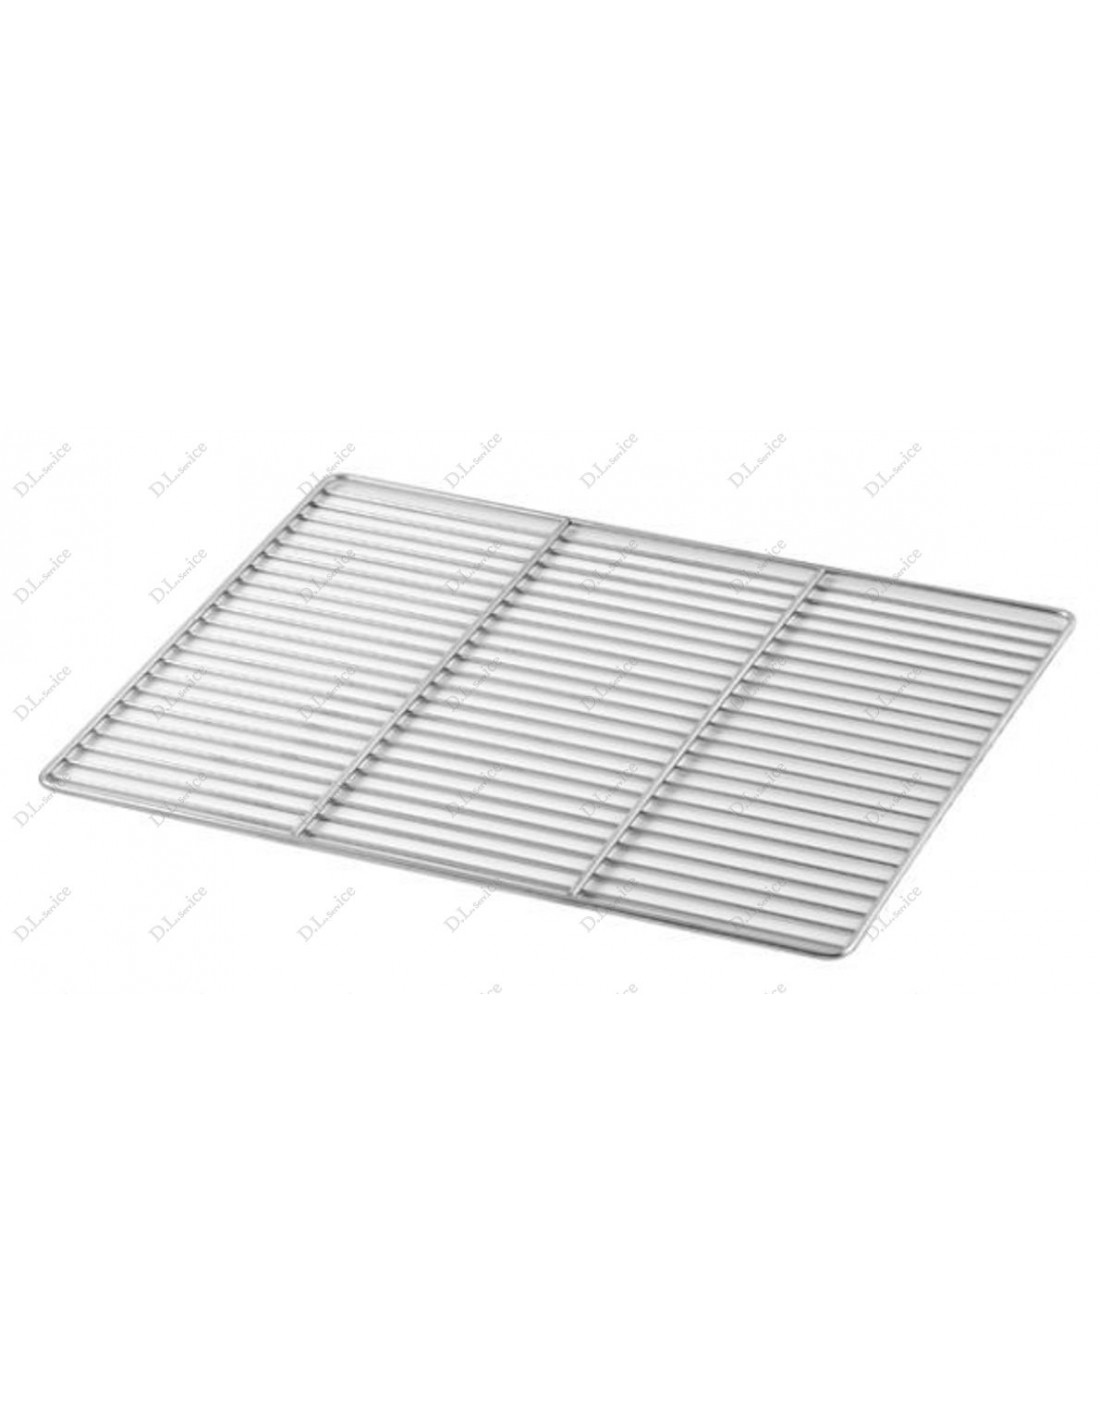 Plasticized grid 60 x 80 cm